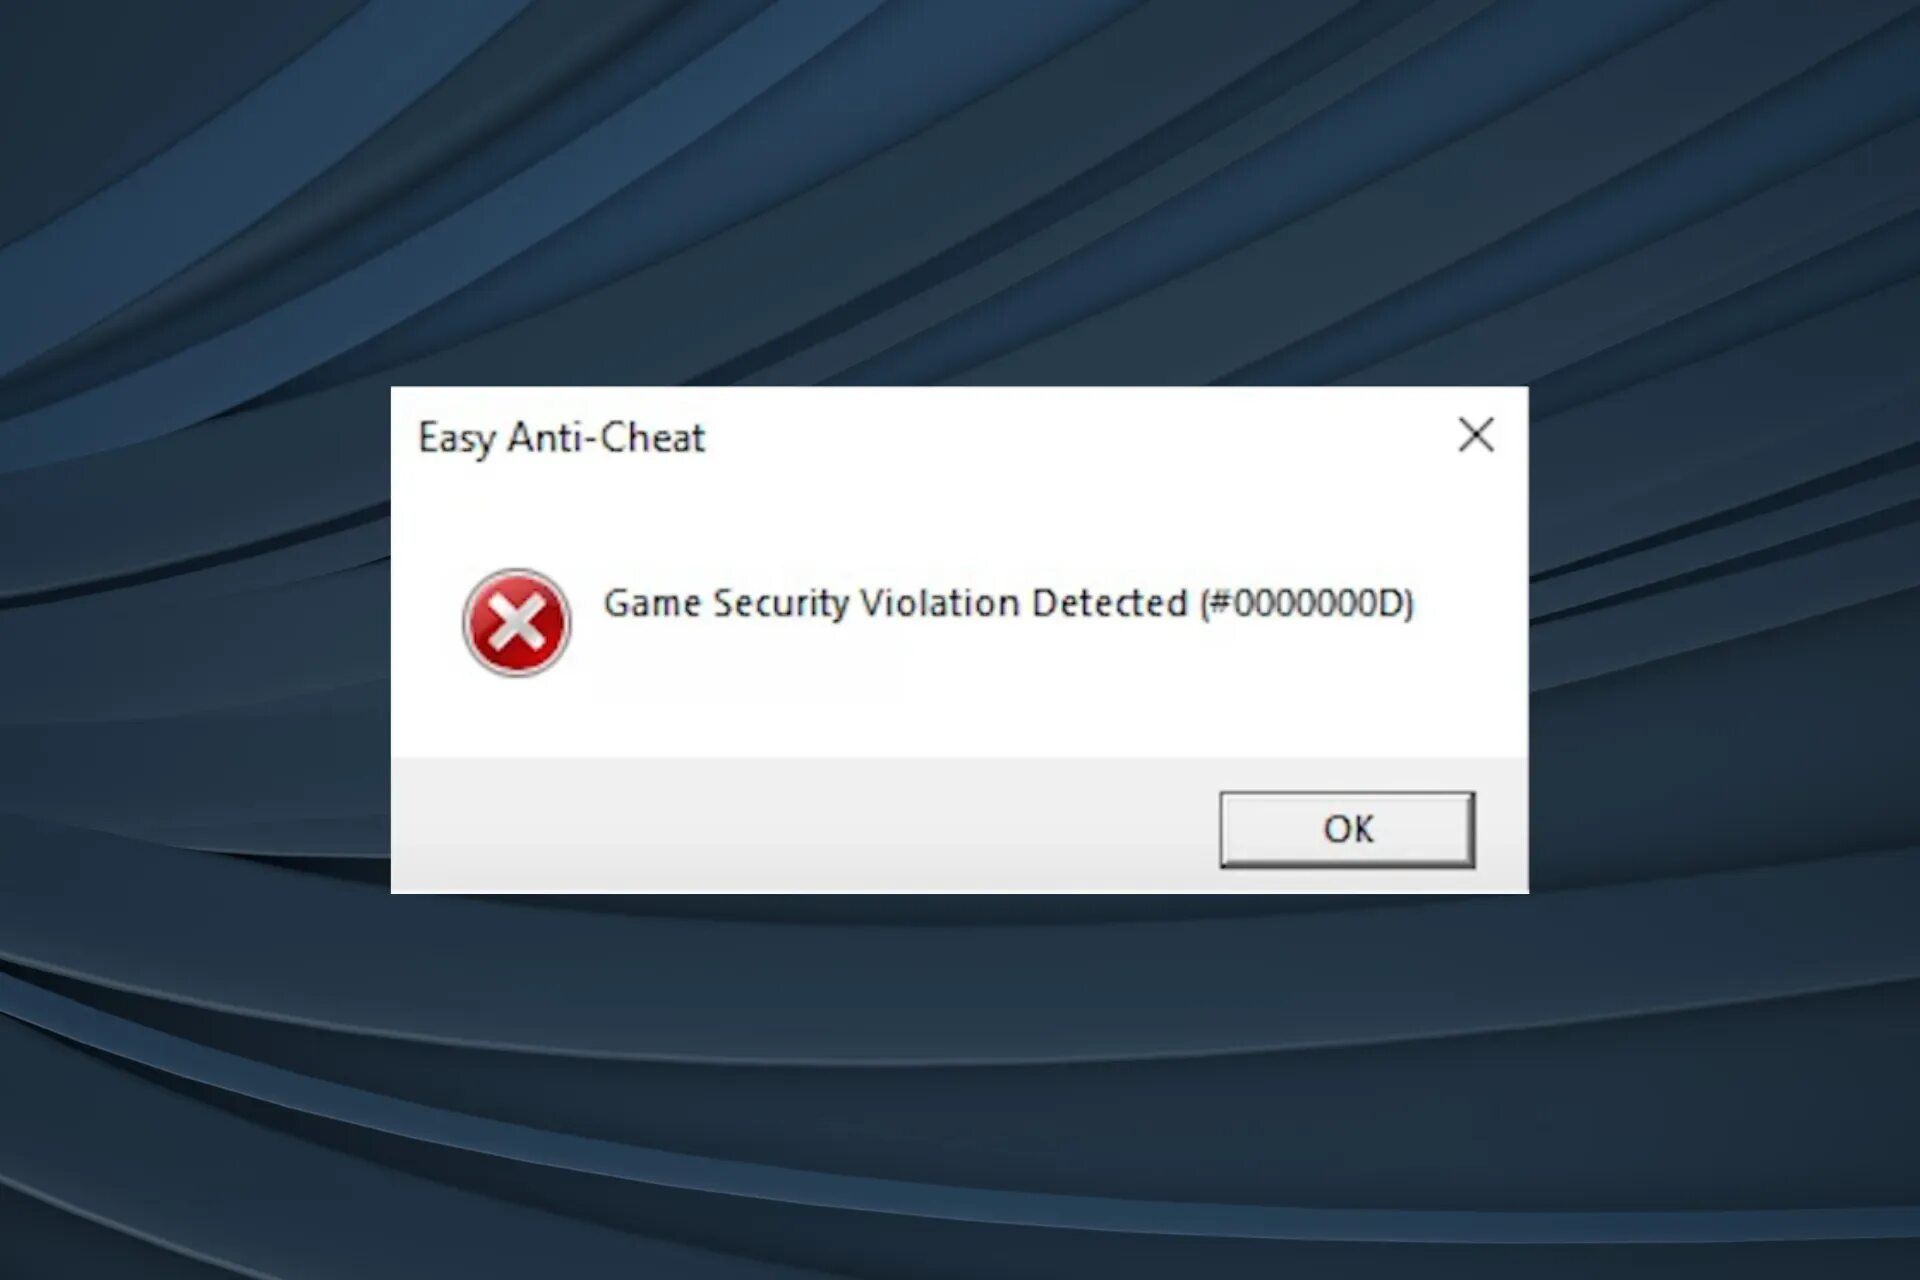 Обнаружено нарушение безопасности. Game Security. Security Violation. Verification failed 0x1a Security Violation. Easy Anti-Cheat x game Security Violation detected (#00000001) ok.